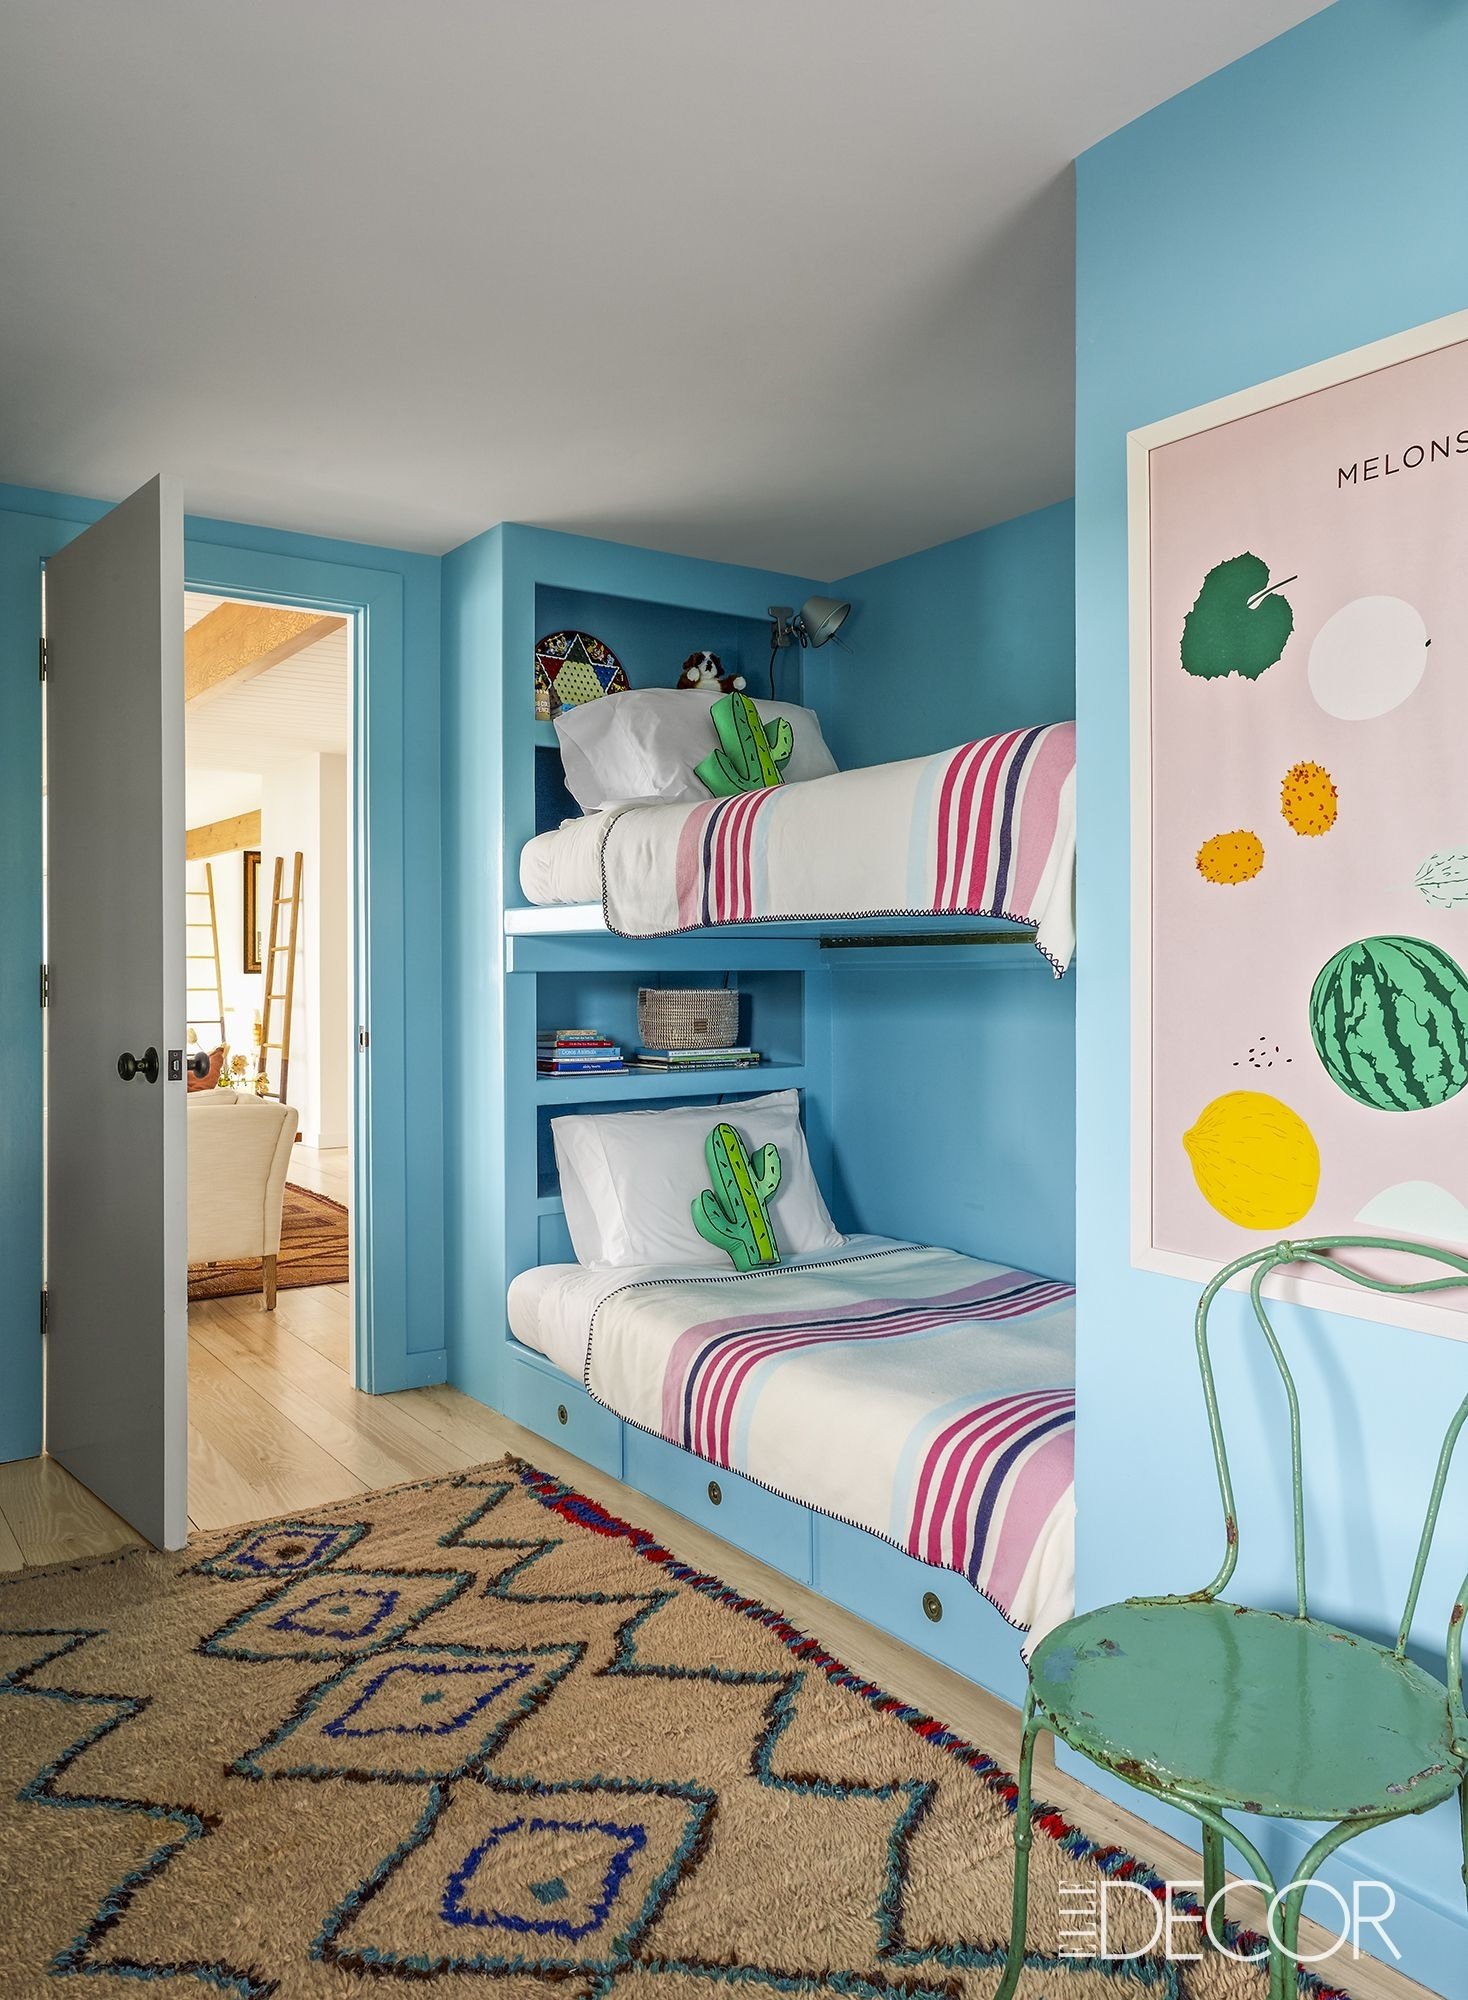 10 Stunning Kids Room Ideas For Boys kids bedroom ideas e280a2 bedroom ideas 2022